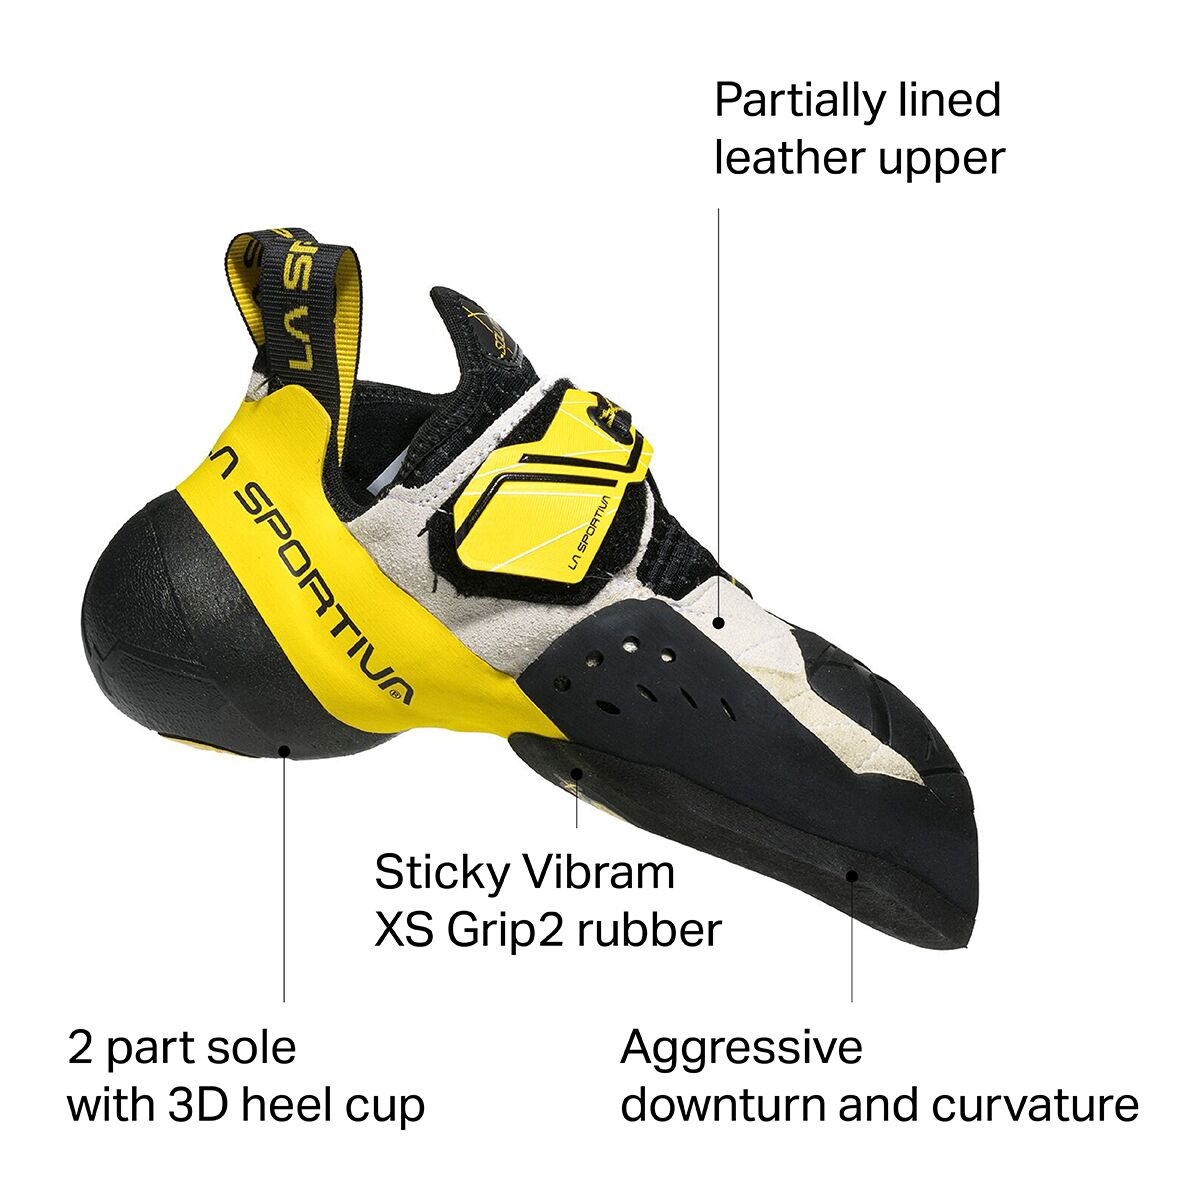 La Sportiva Solution Climbing Shoes White Yellow - 38.5